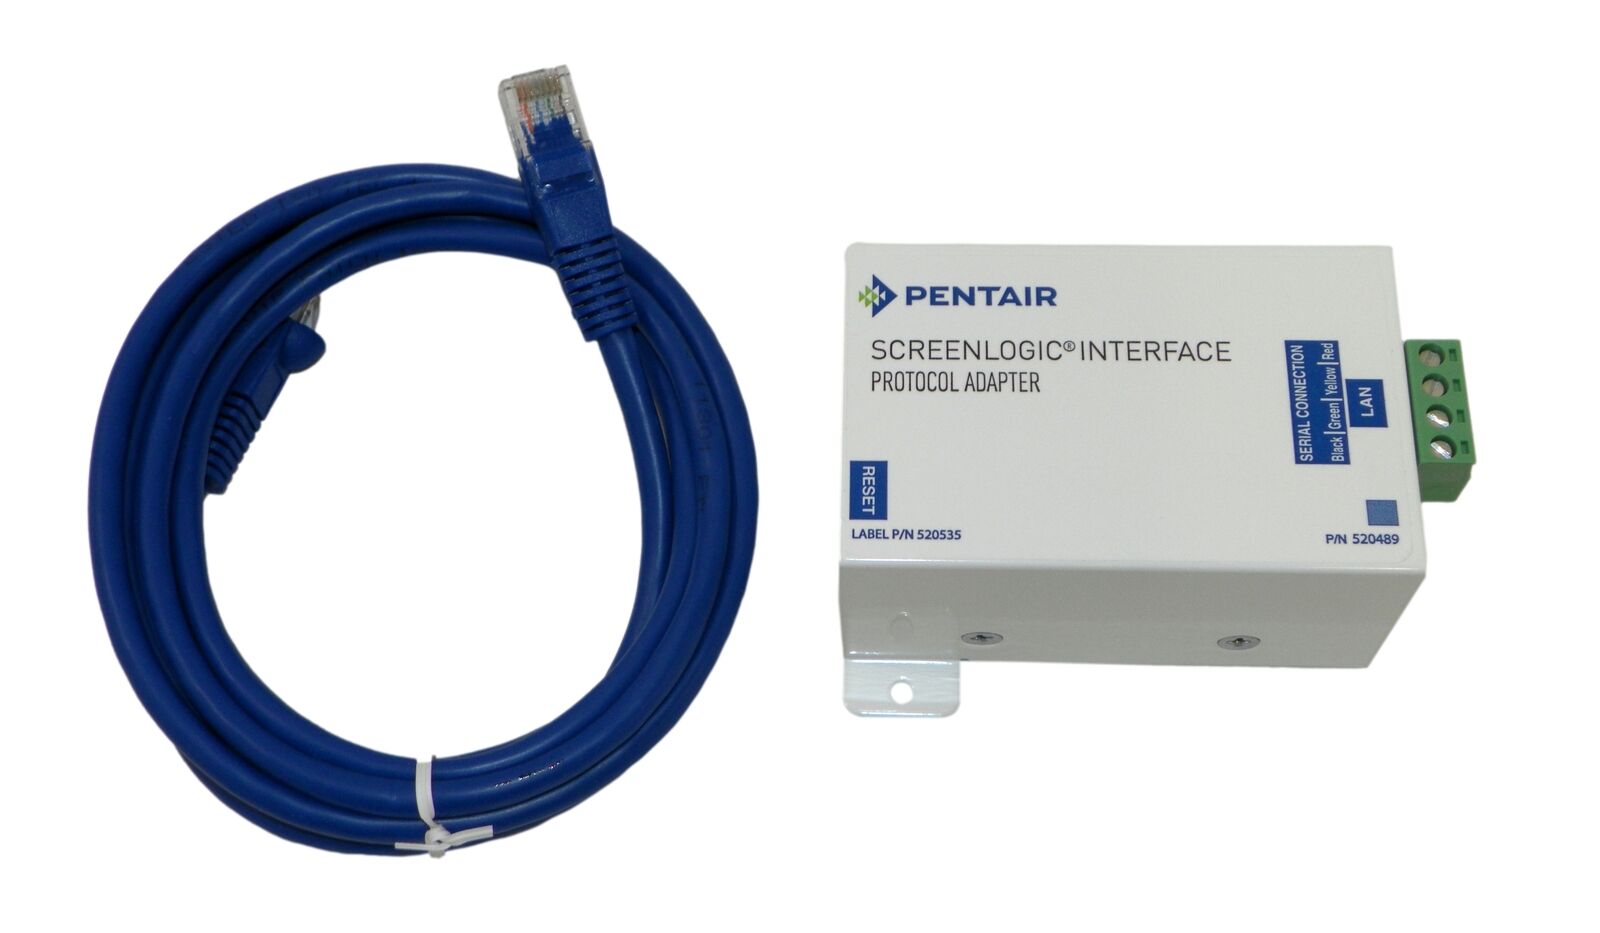 Pentair 520500 IntelliTouch ScreenLogic2 Interface Kit for iPhone/iPad/iPod